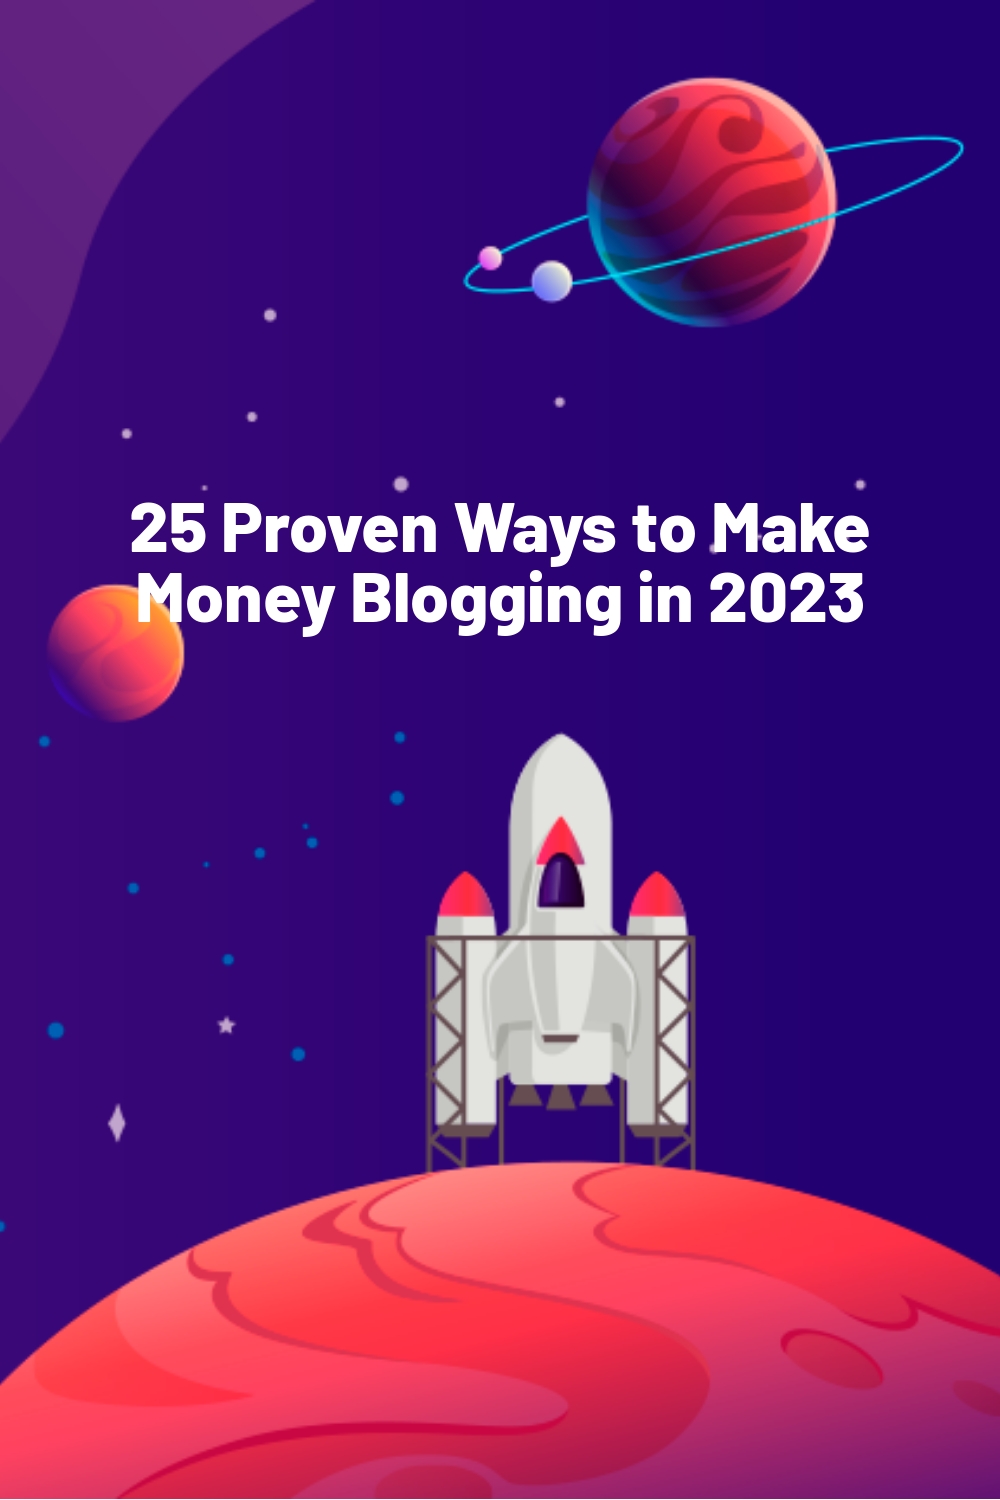 25 Proven Ways to Make Money Blogging in 2023